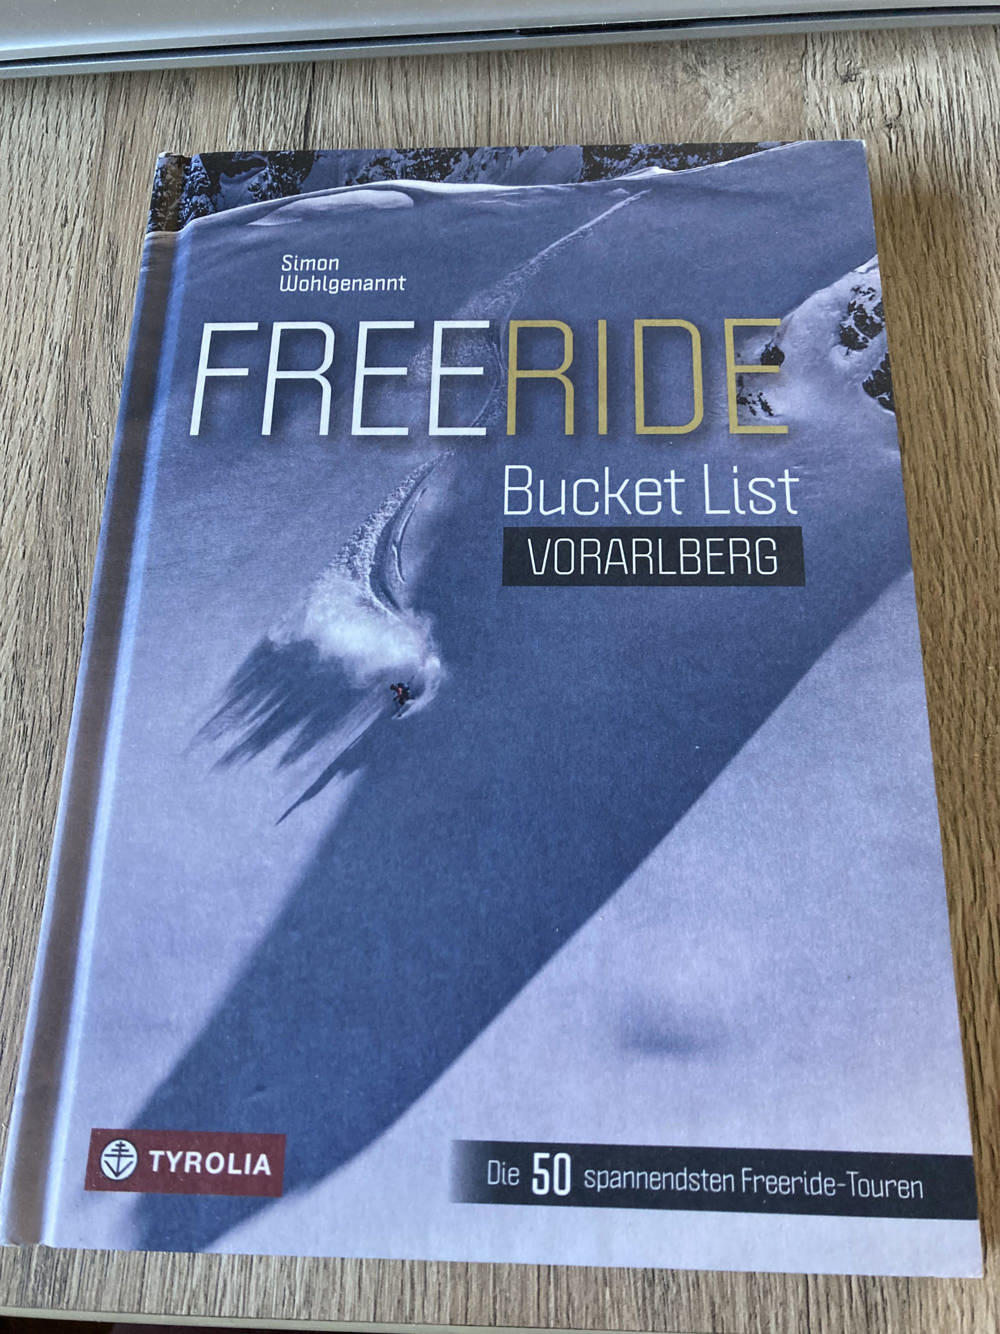 Verkaufe Buch "Freeride Bucket List Vorarlberg"